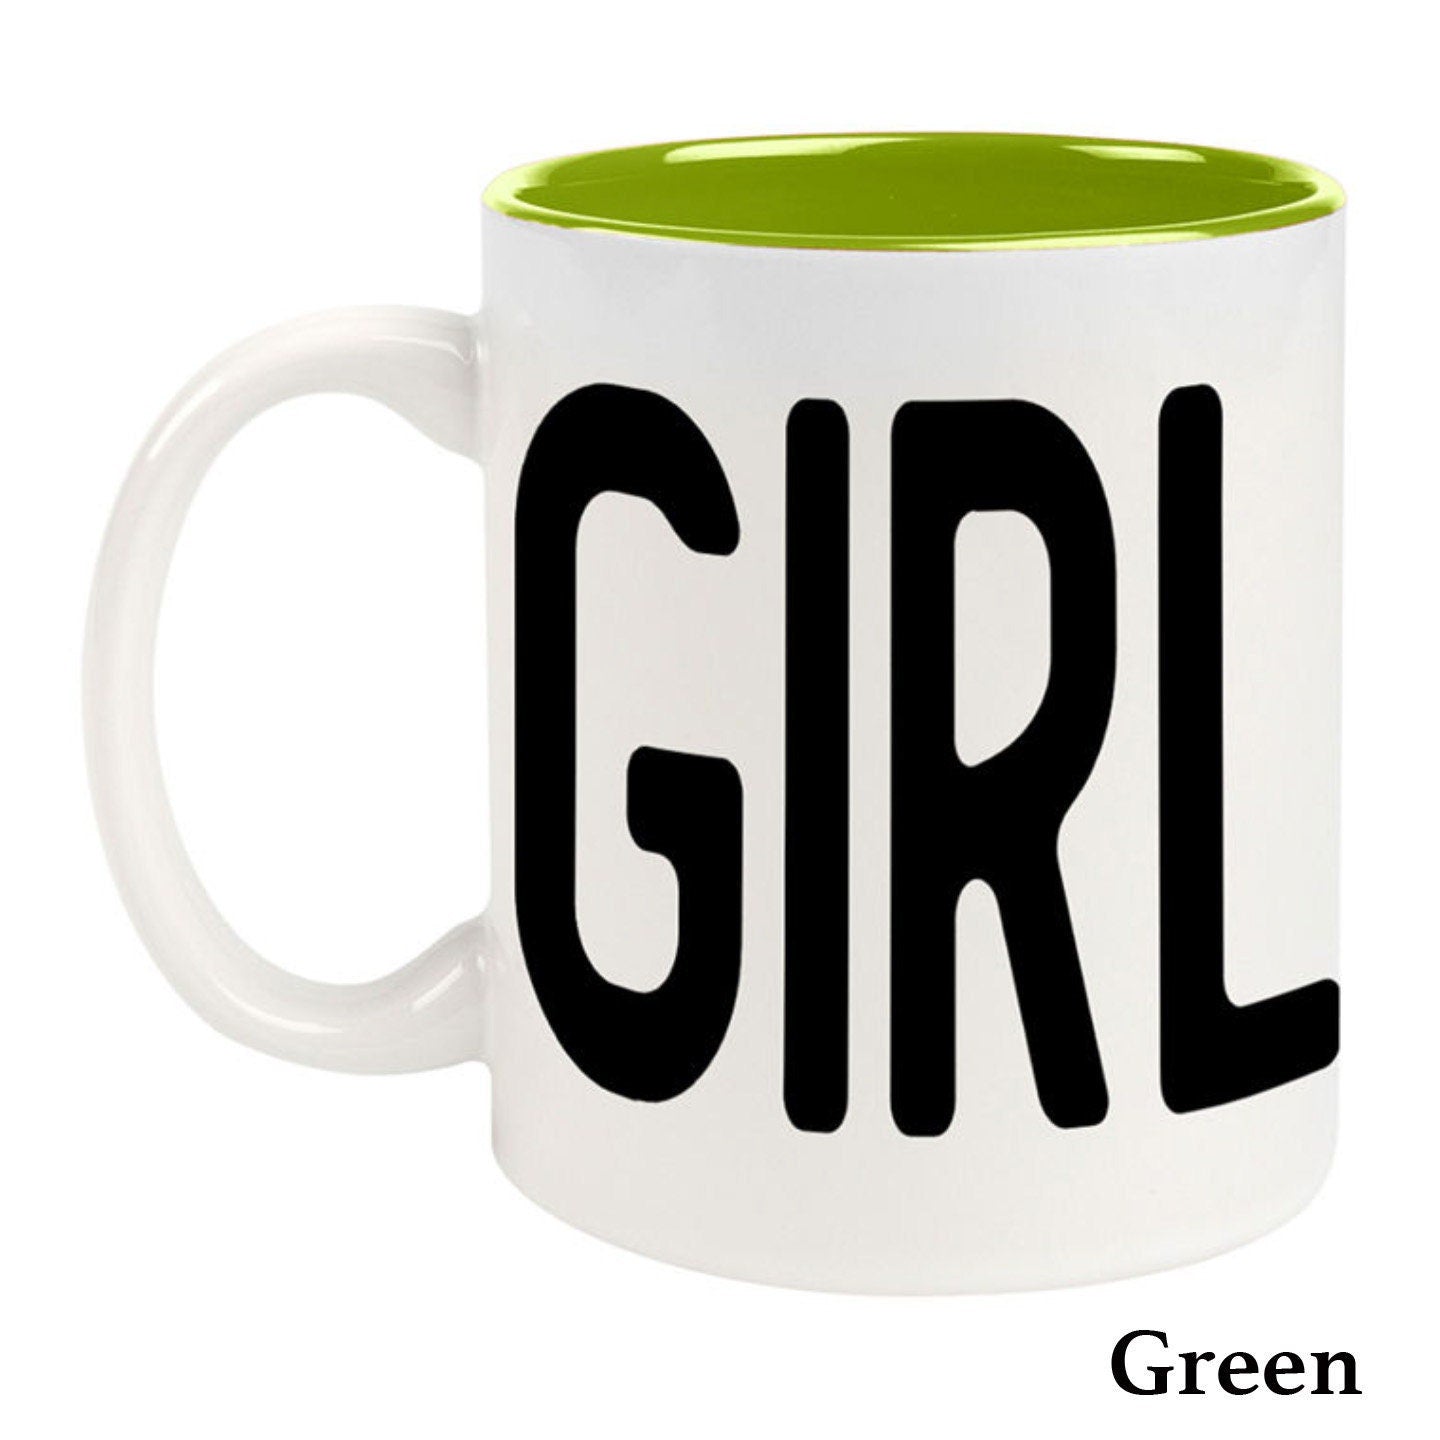 Girldad® Coffee Mug